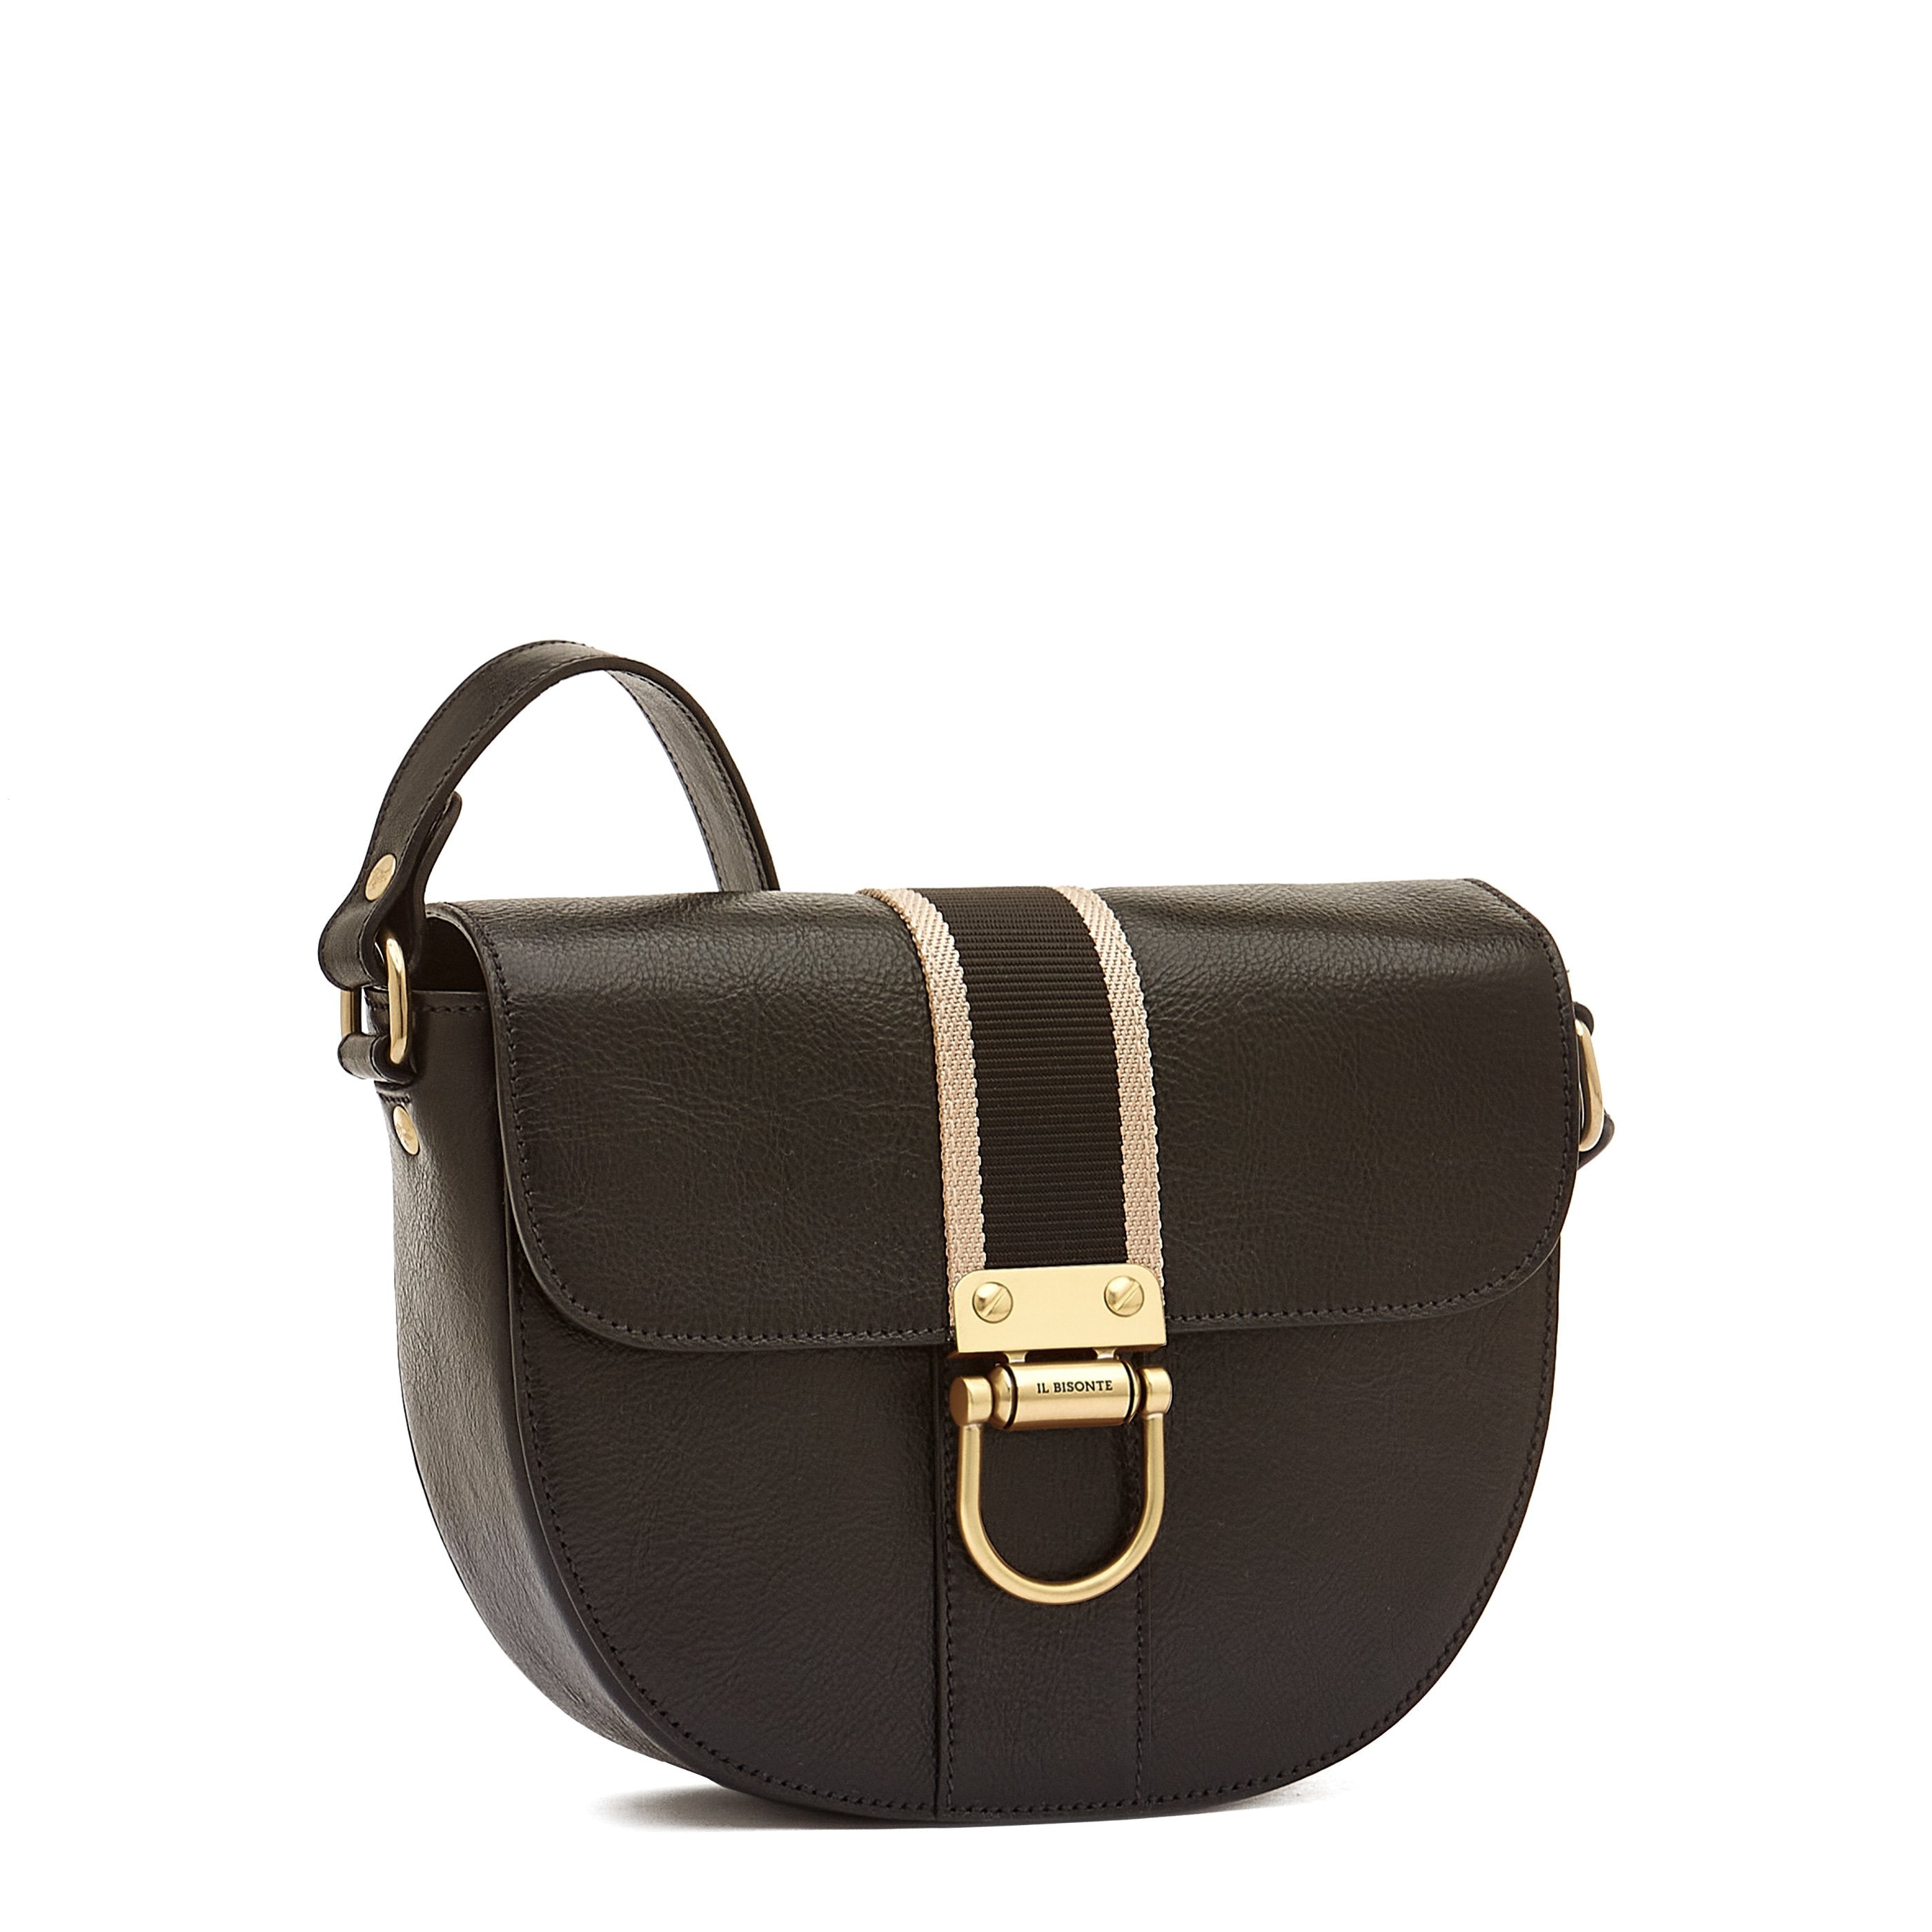 Solaria | Women's crossbody bag in leather color black